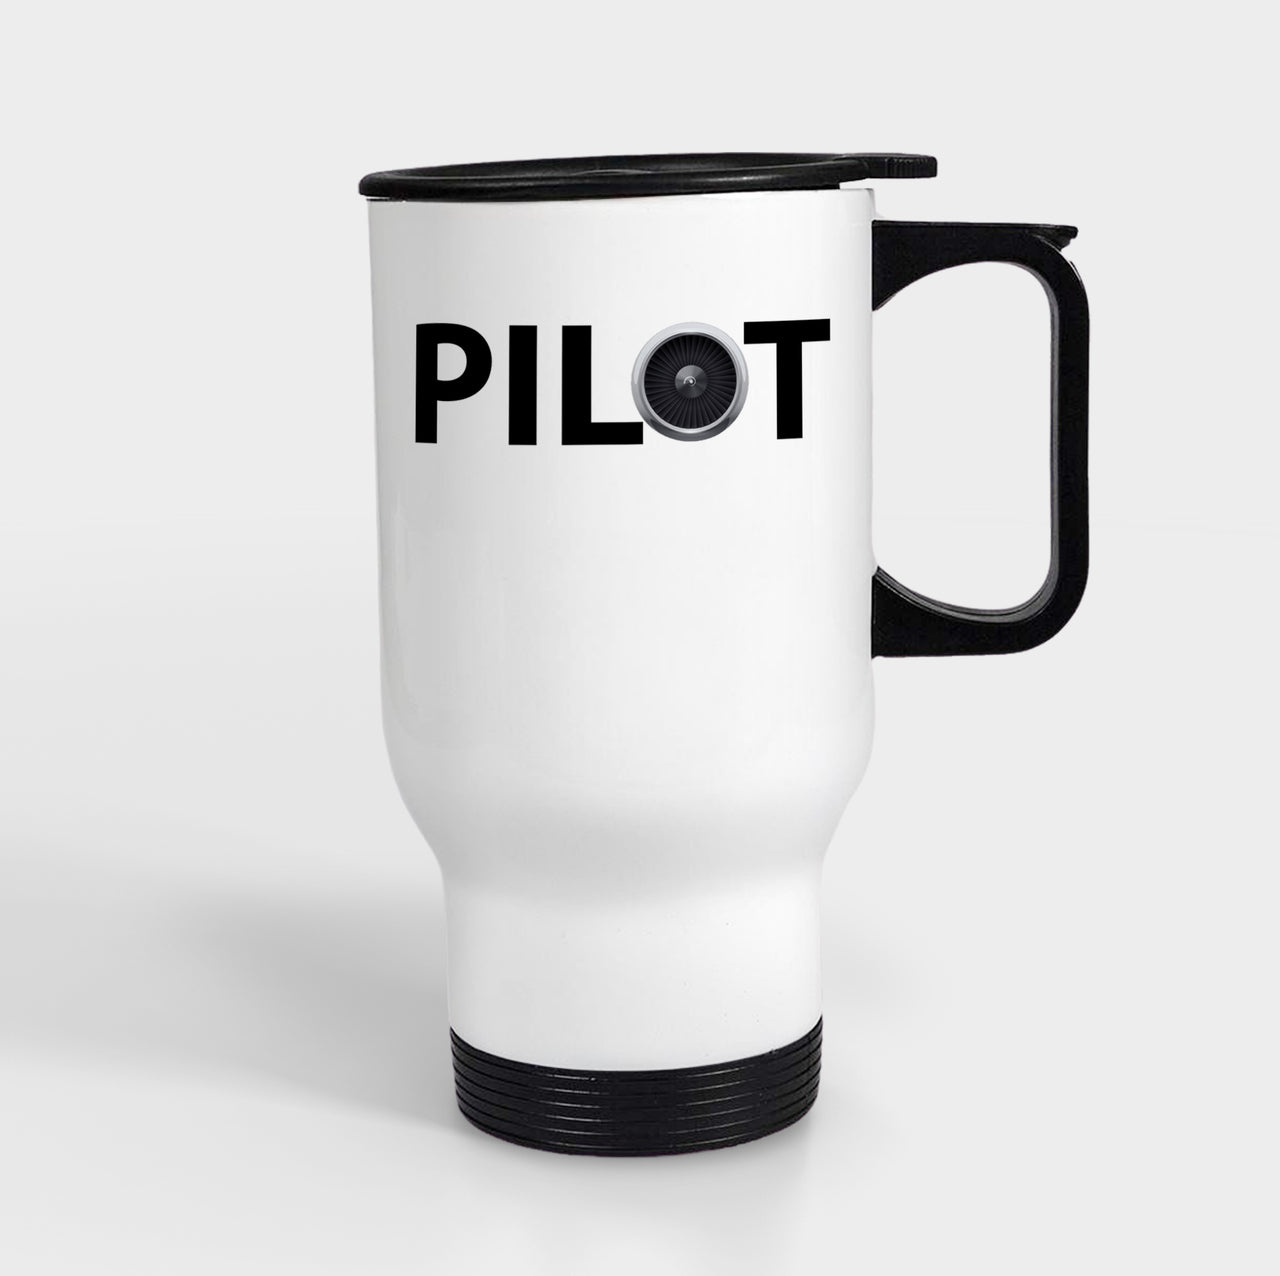 Pilot & Jet Engine Designed Travel Mugs (With Holder)